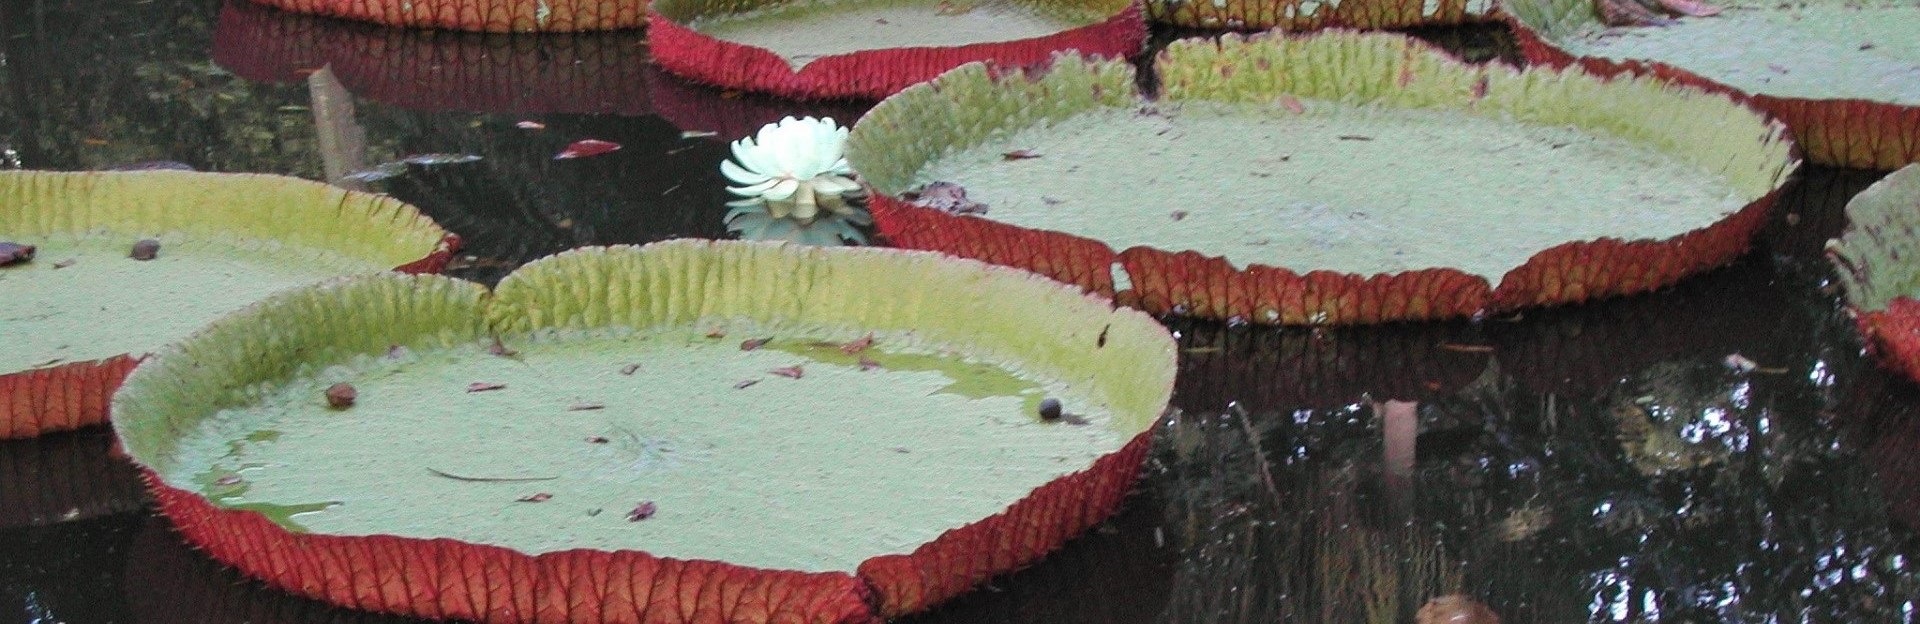 Mauritius Nenuphars-jardin-pamplemousses slider